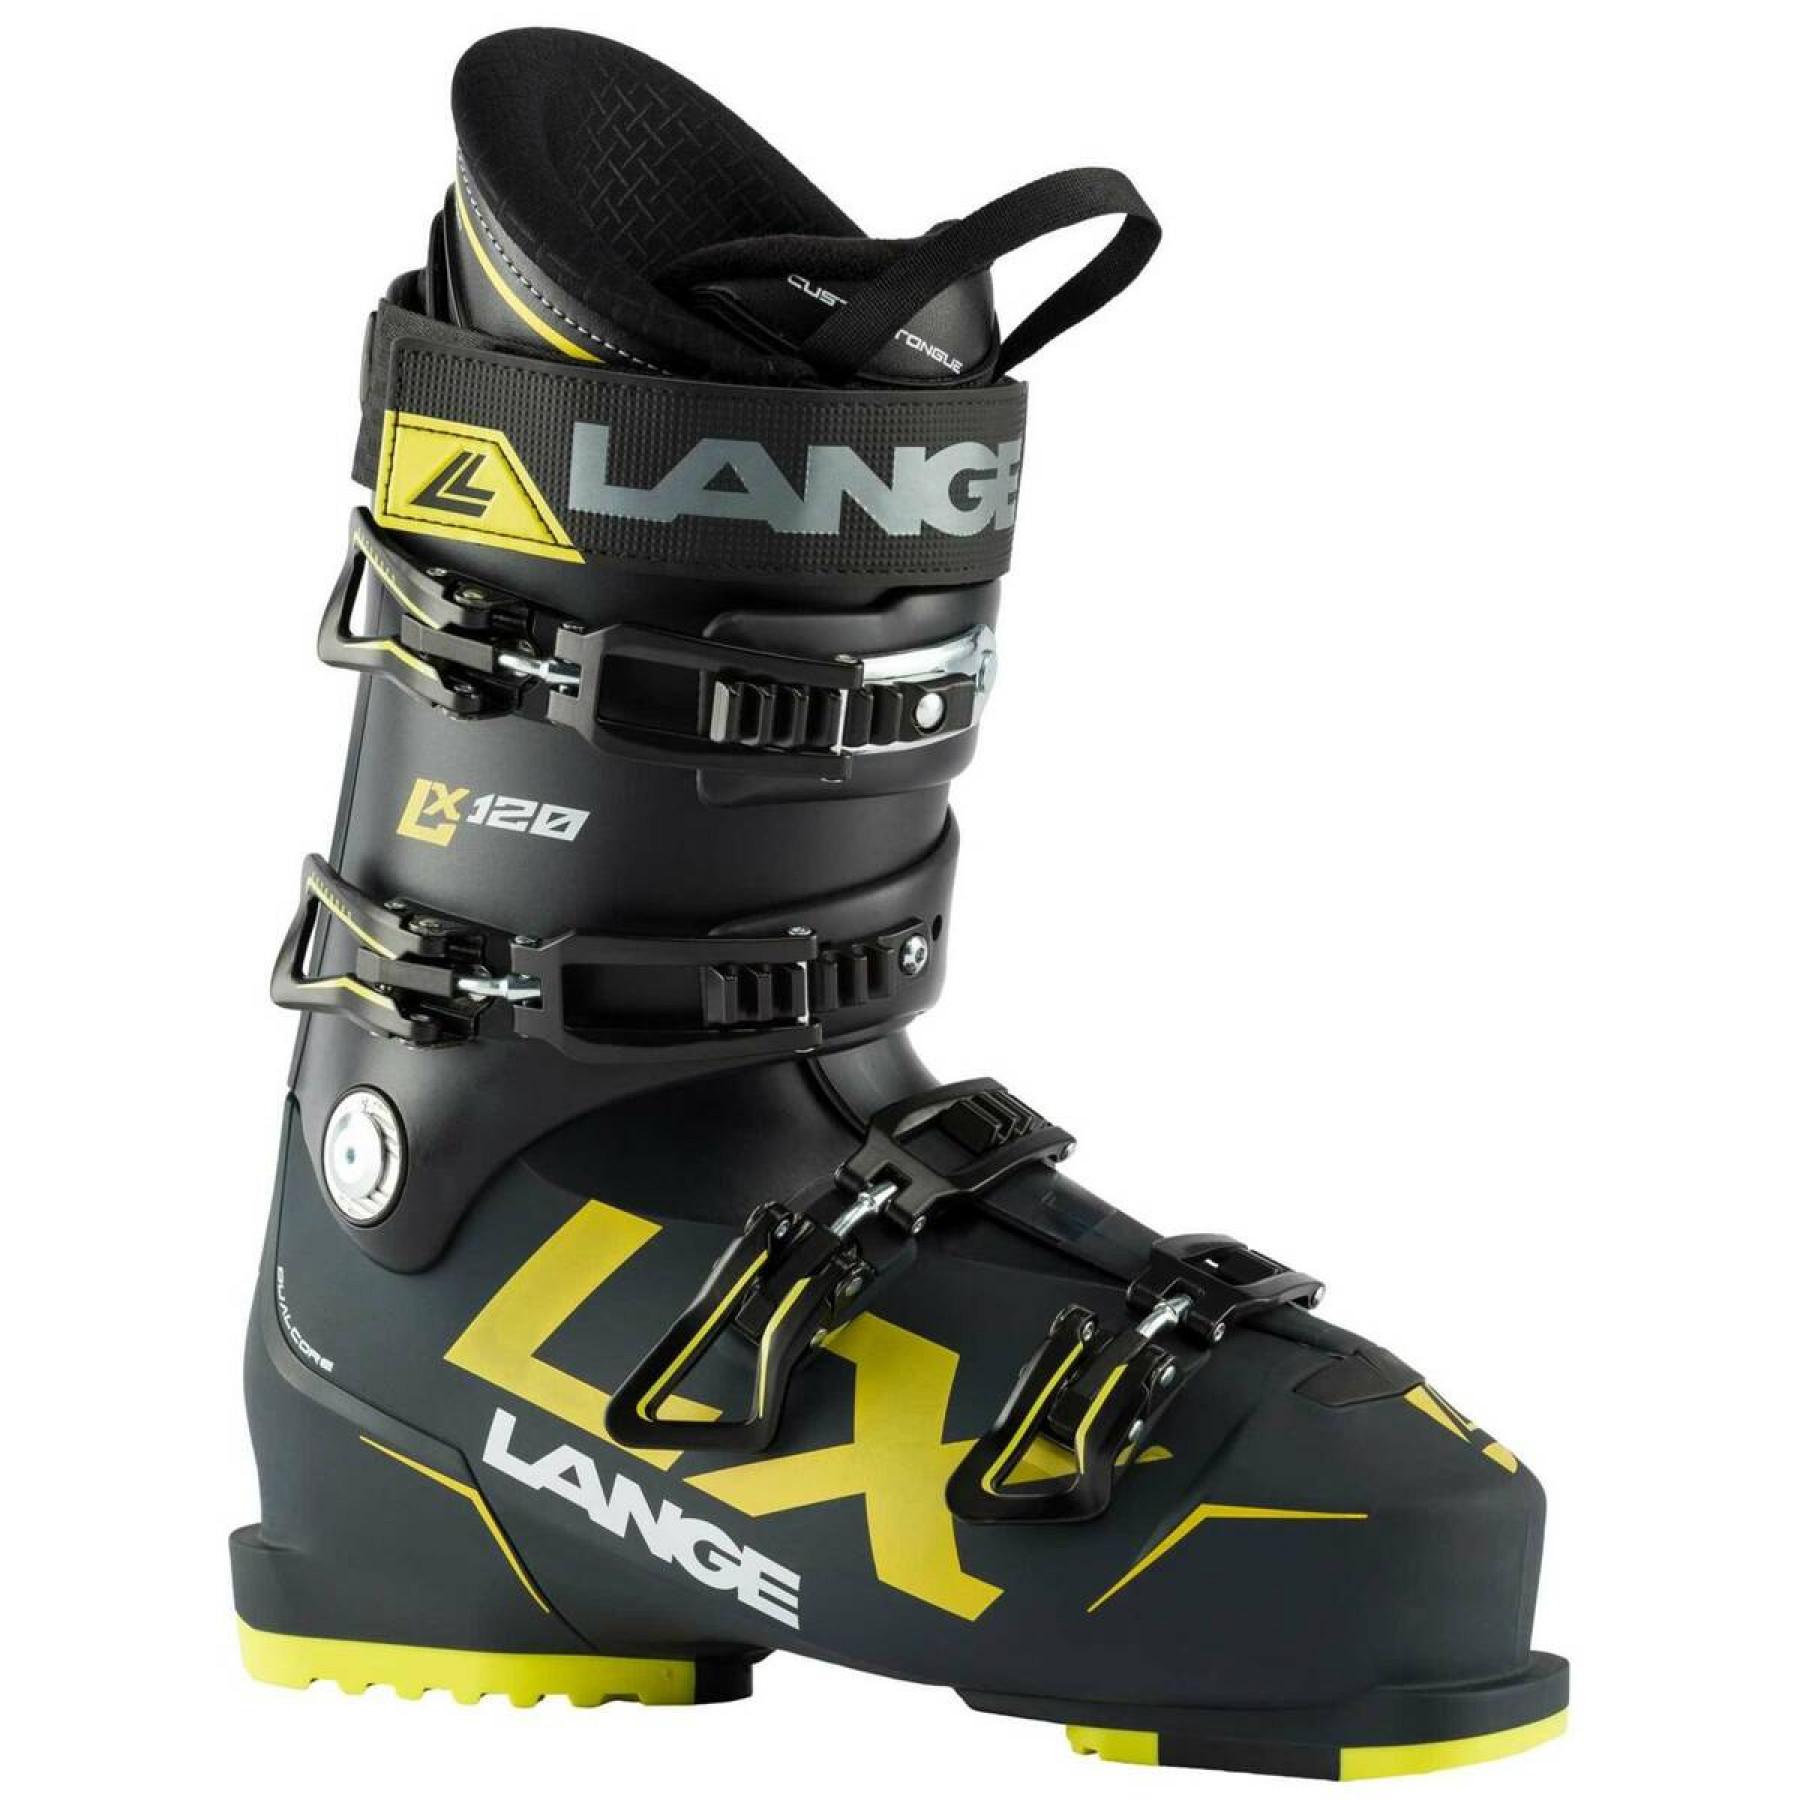 Buty narciarskie Lange lx 120